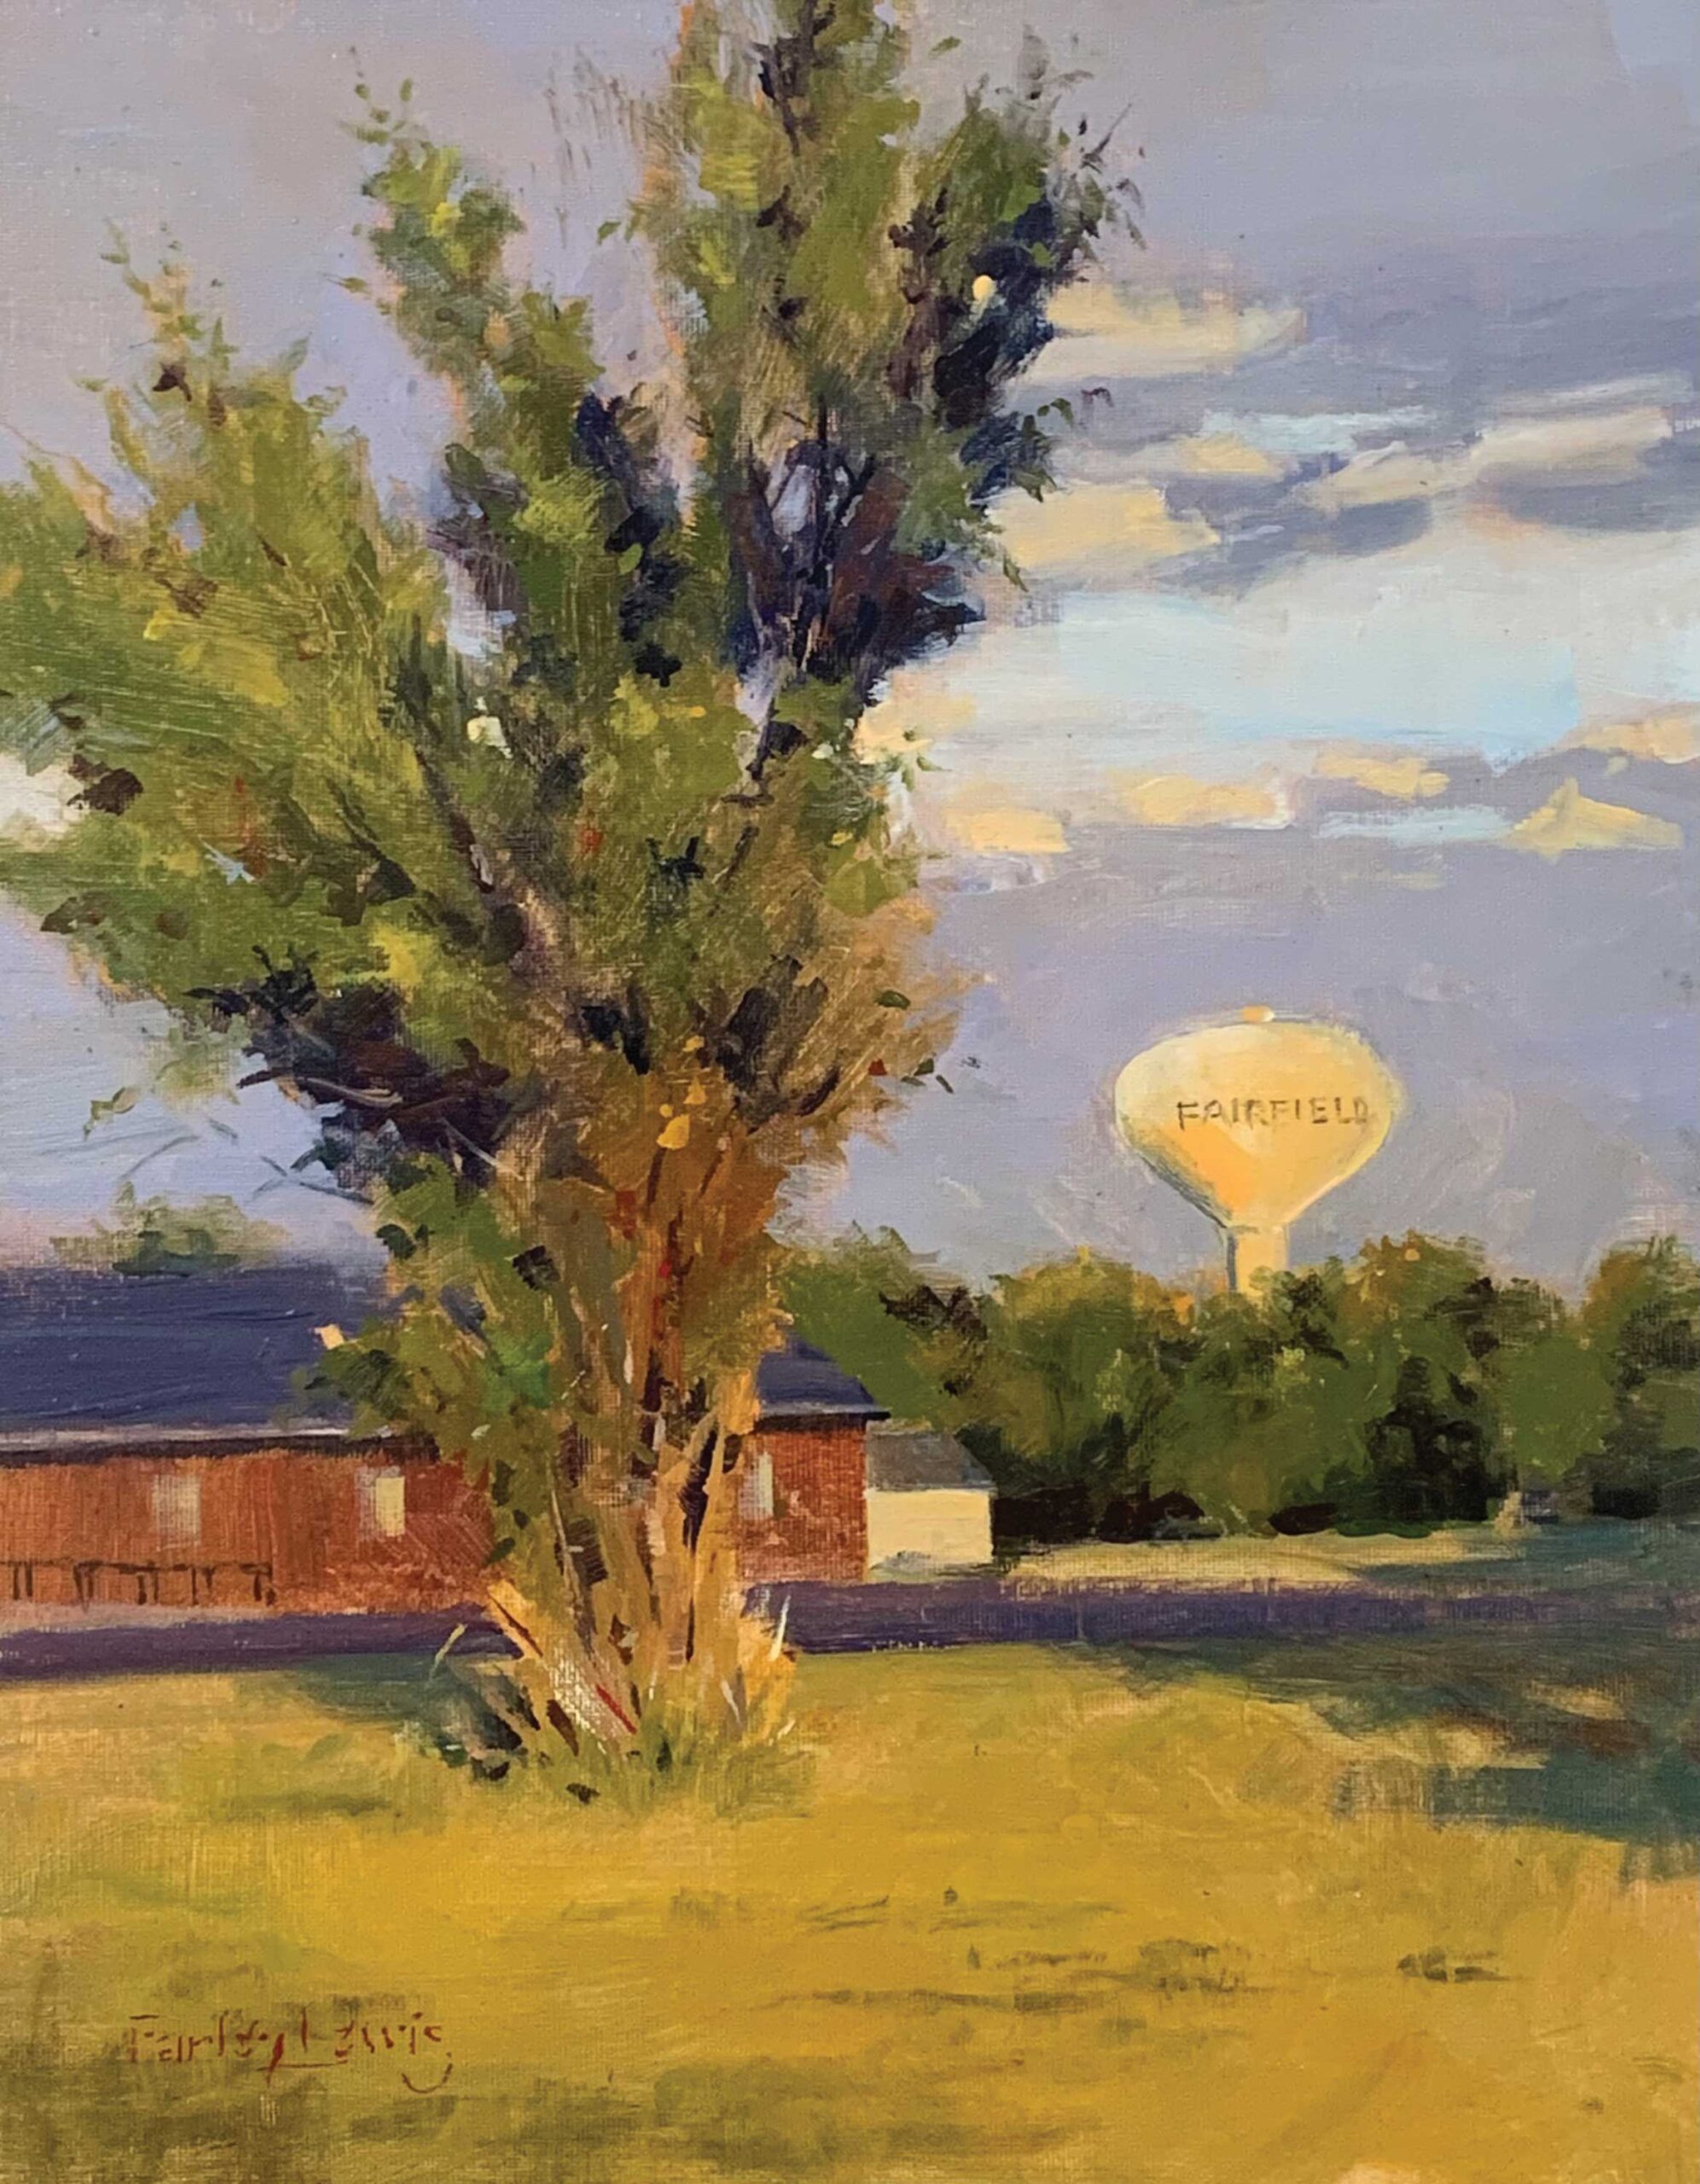 Farley Lewis, “Dawn Over Fairfield,” 2019, acrylic, 11 x 14 in., Available from artist, Plein air